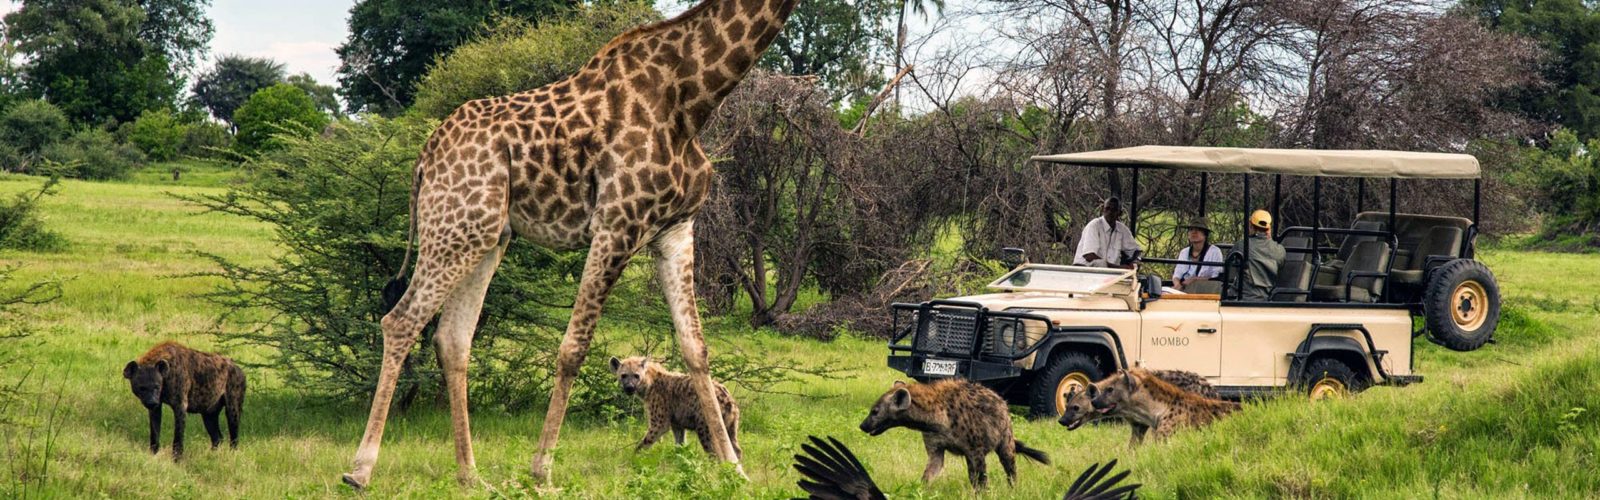 Safari jeep watching giraffe and jackals